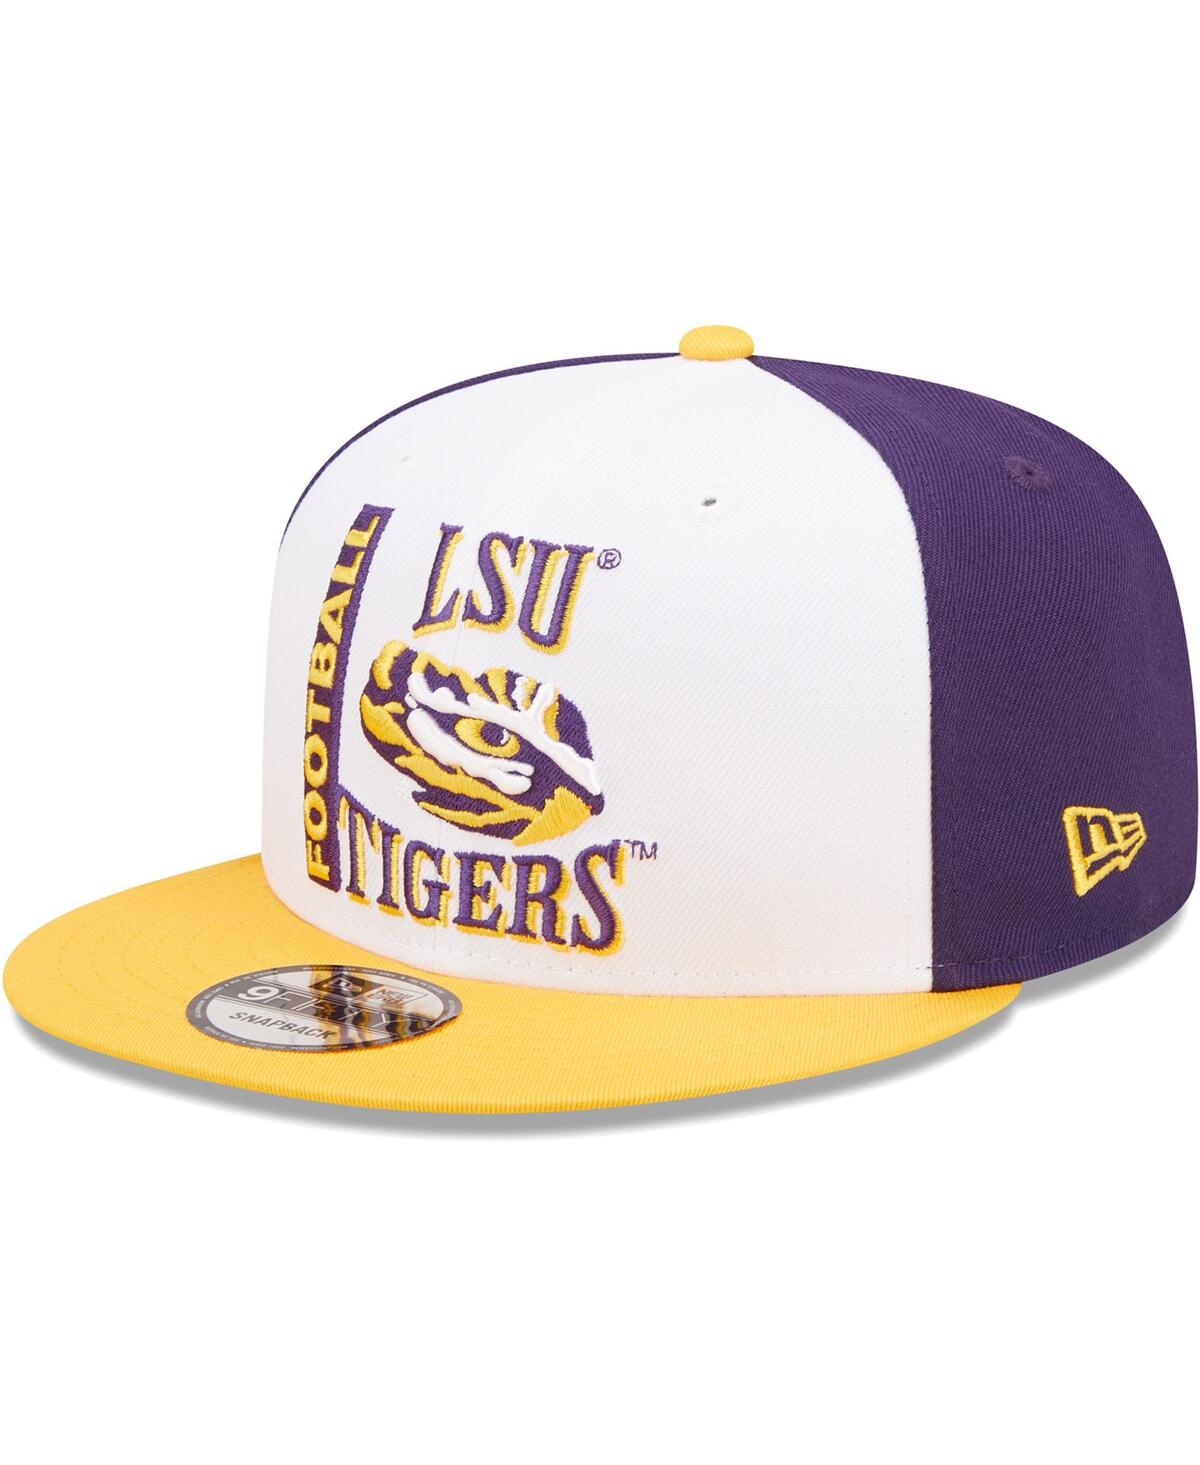 New Era Navy/Gray Detroit Tigers Team Split 9FIFTY Snapback Hat